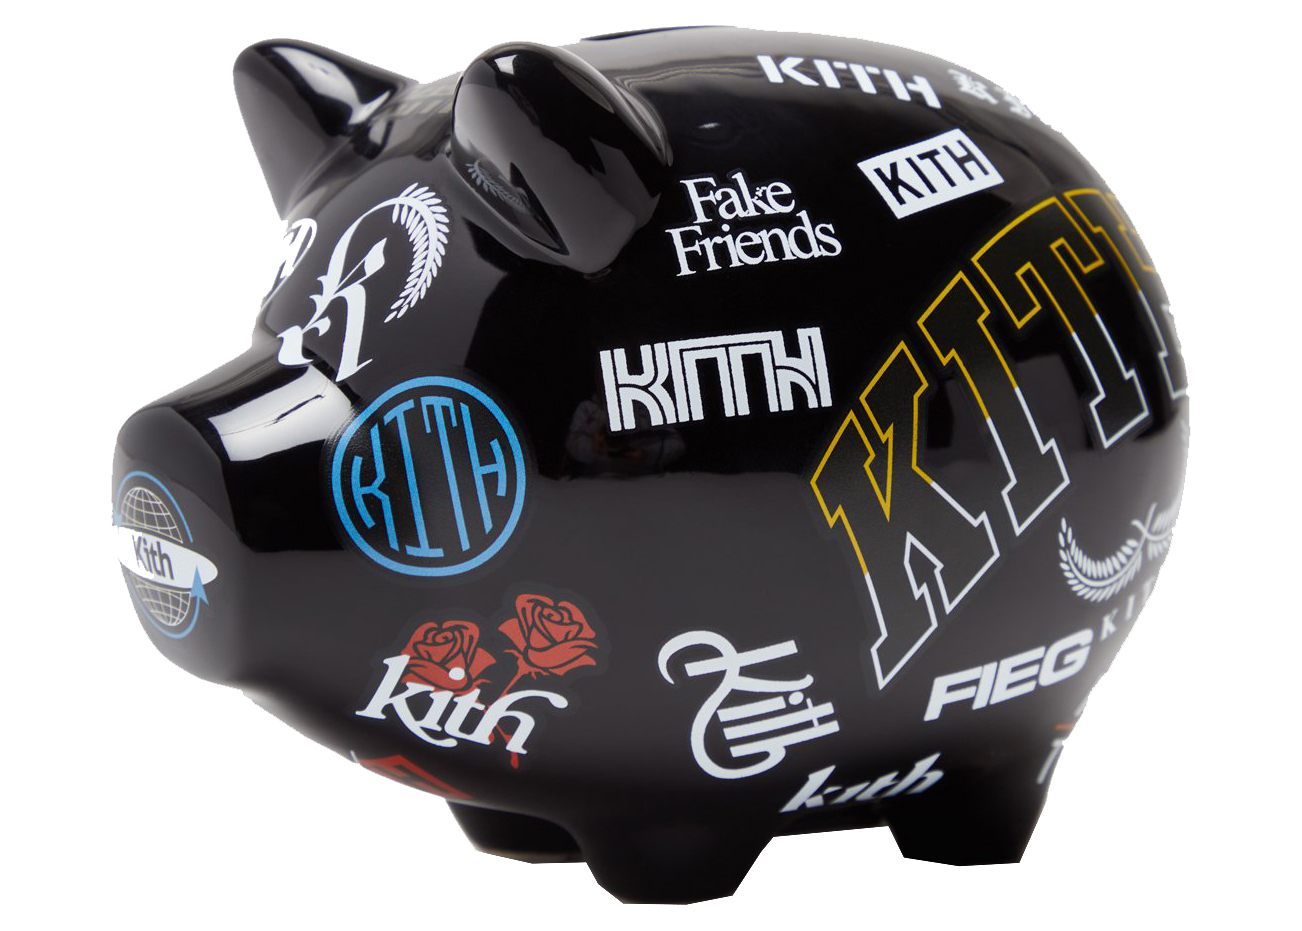 Kith Novelty Logo Piggy Bank Black